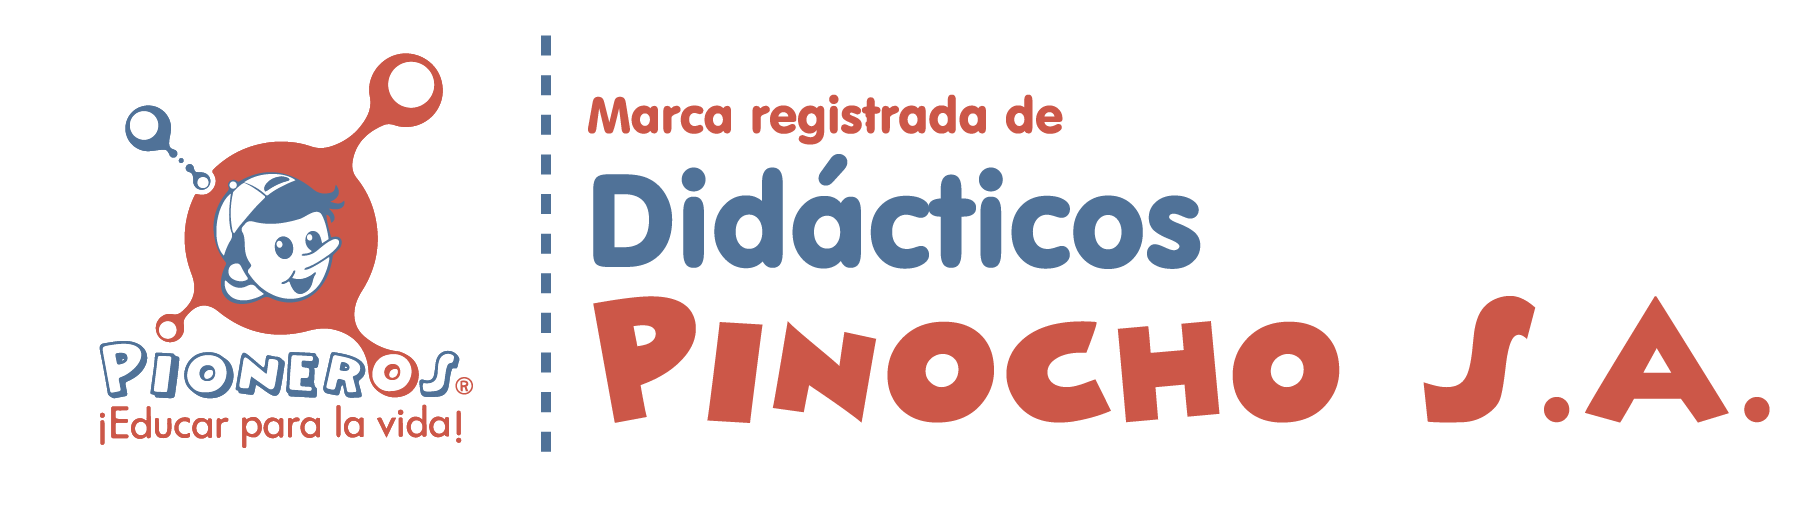 Logo-Pinocho-tercera-opcion